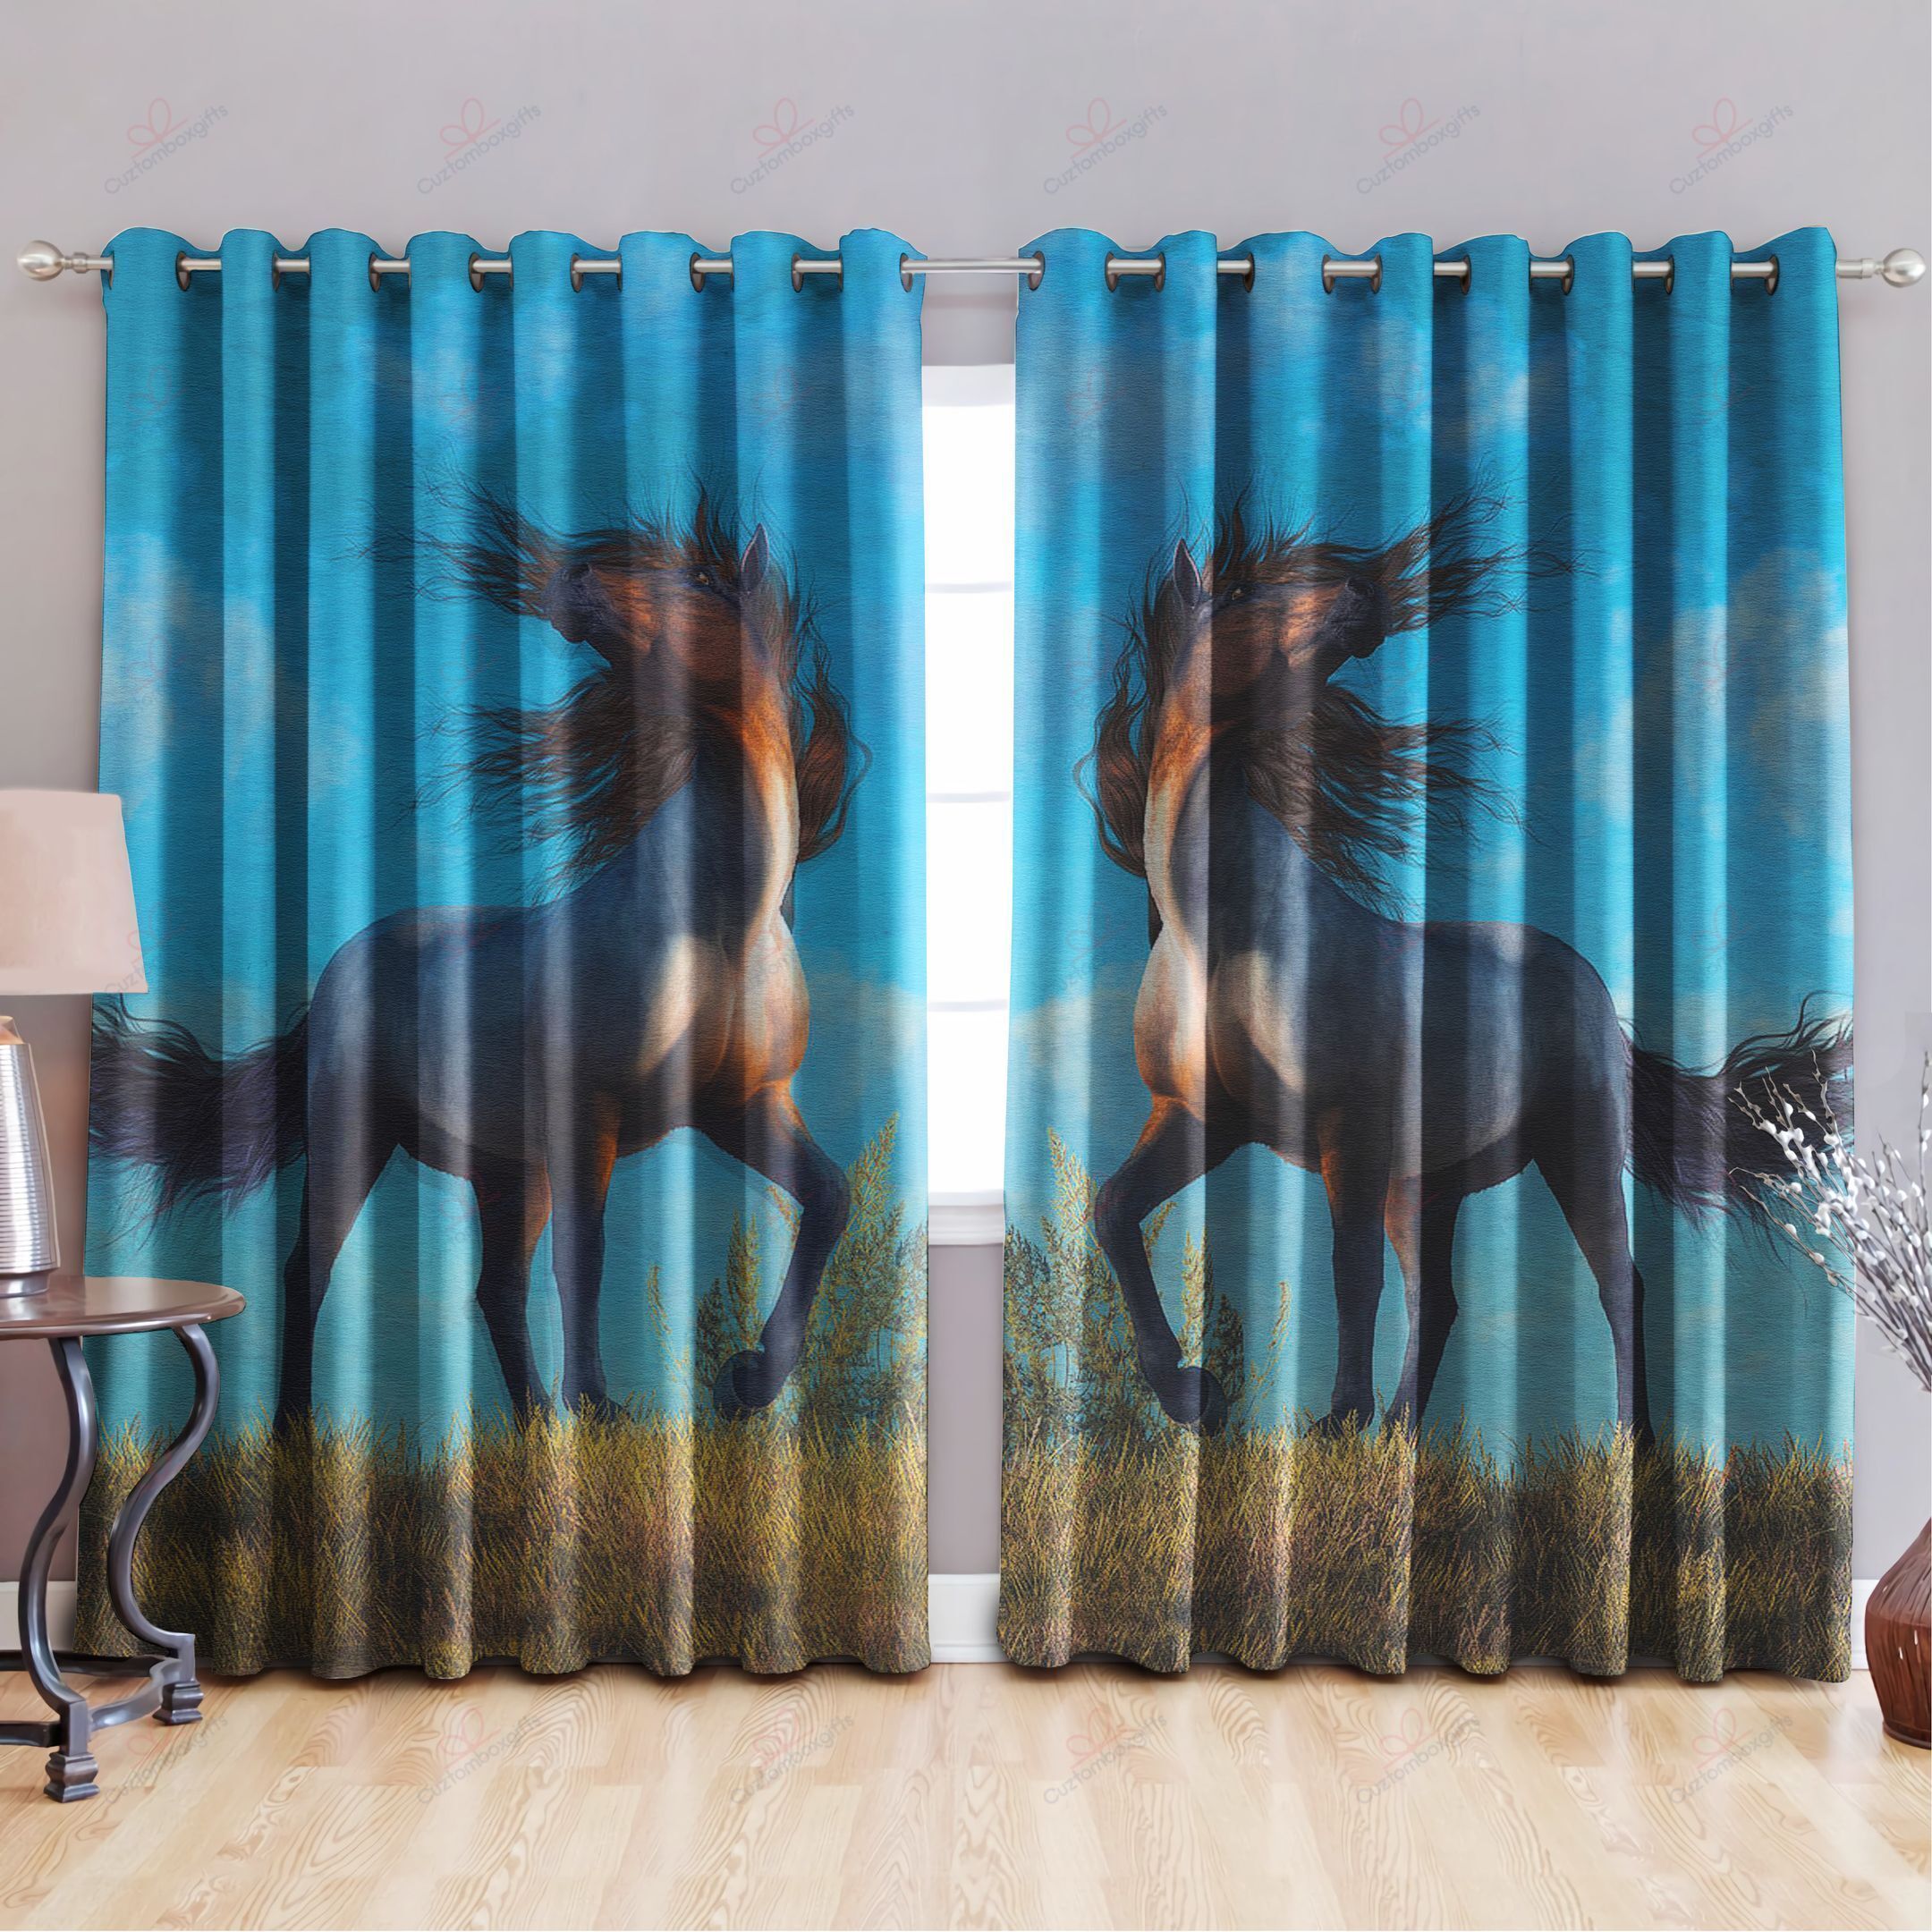 Beautiful Horse Printed Window Curtains Home Decor